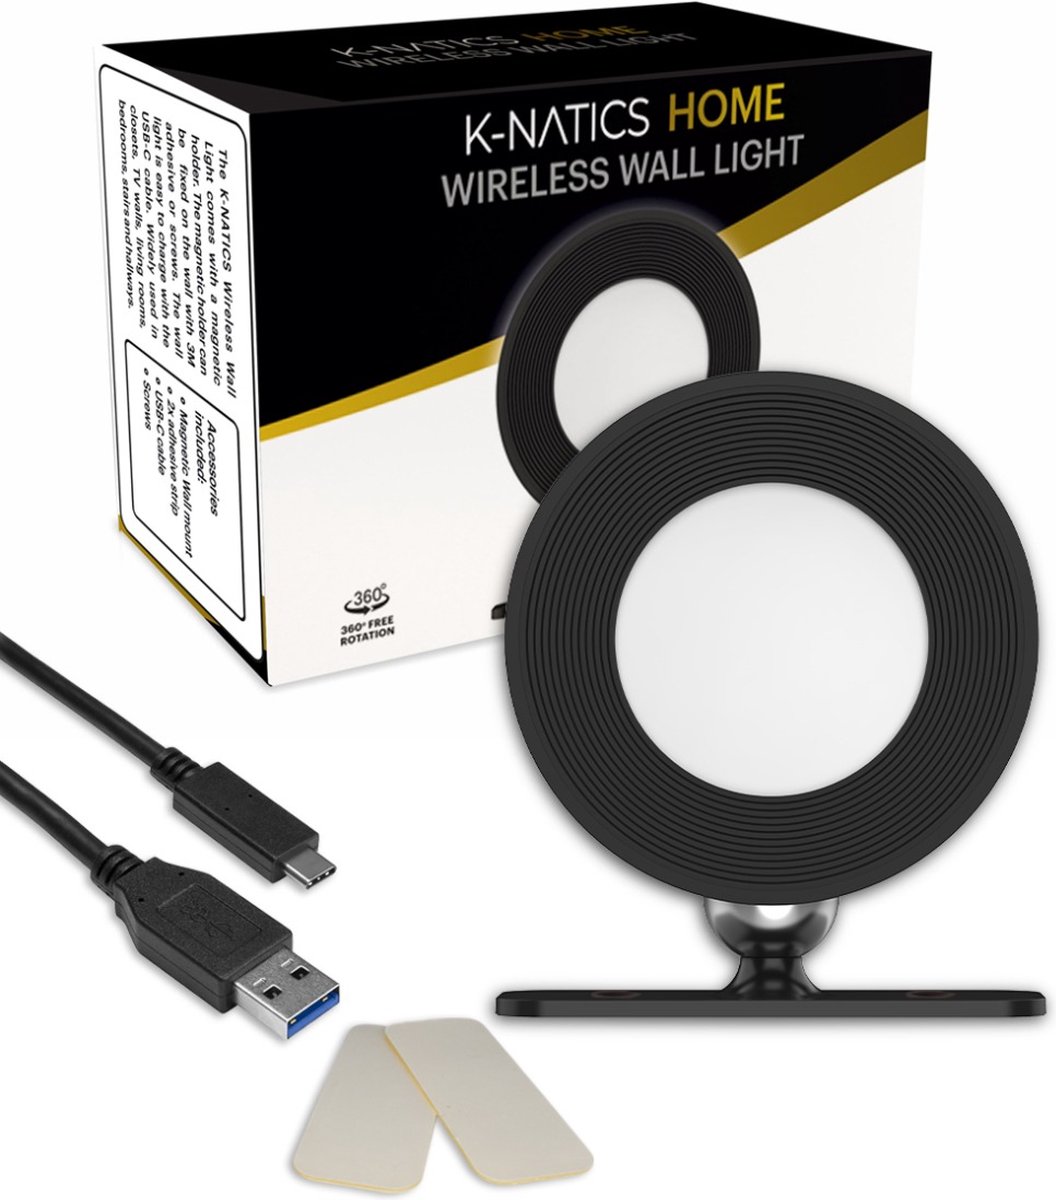 K-NATICS Wandlamp Oplaadbaar - Draadloos - Dimbaar - Smart Touch - Muurlamp Binnen Woonkamer/Slaapkamer/Badkamer/Kinderkamer - K-natics